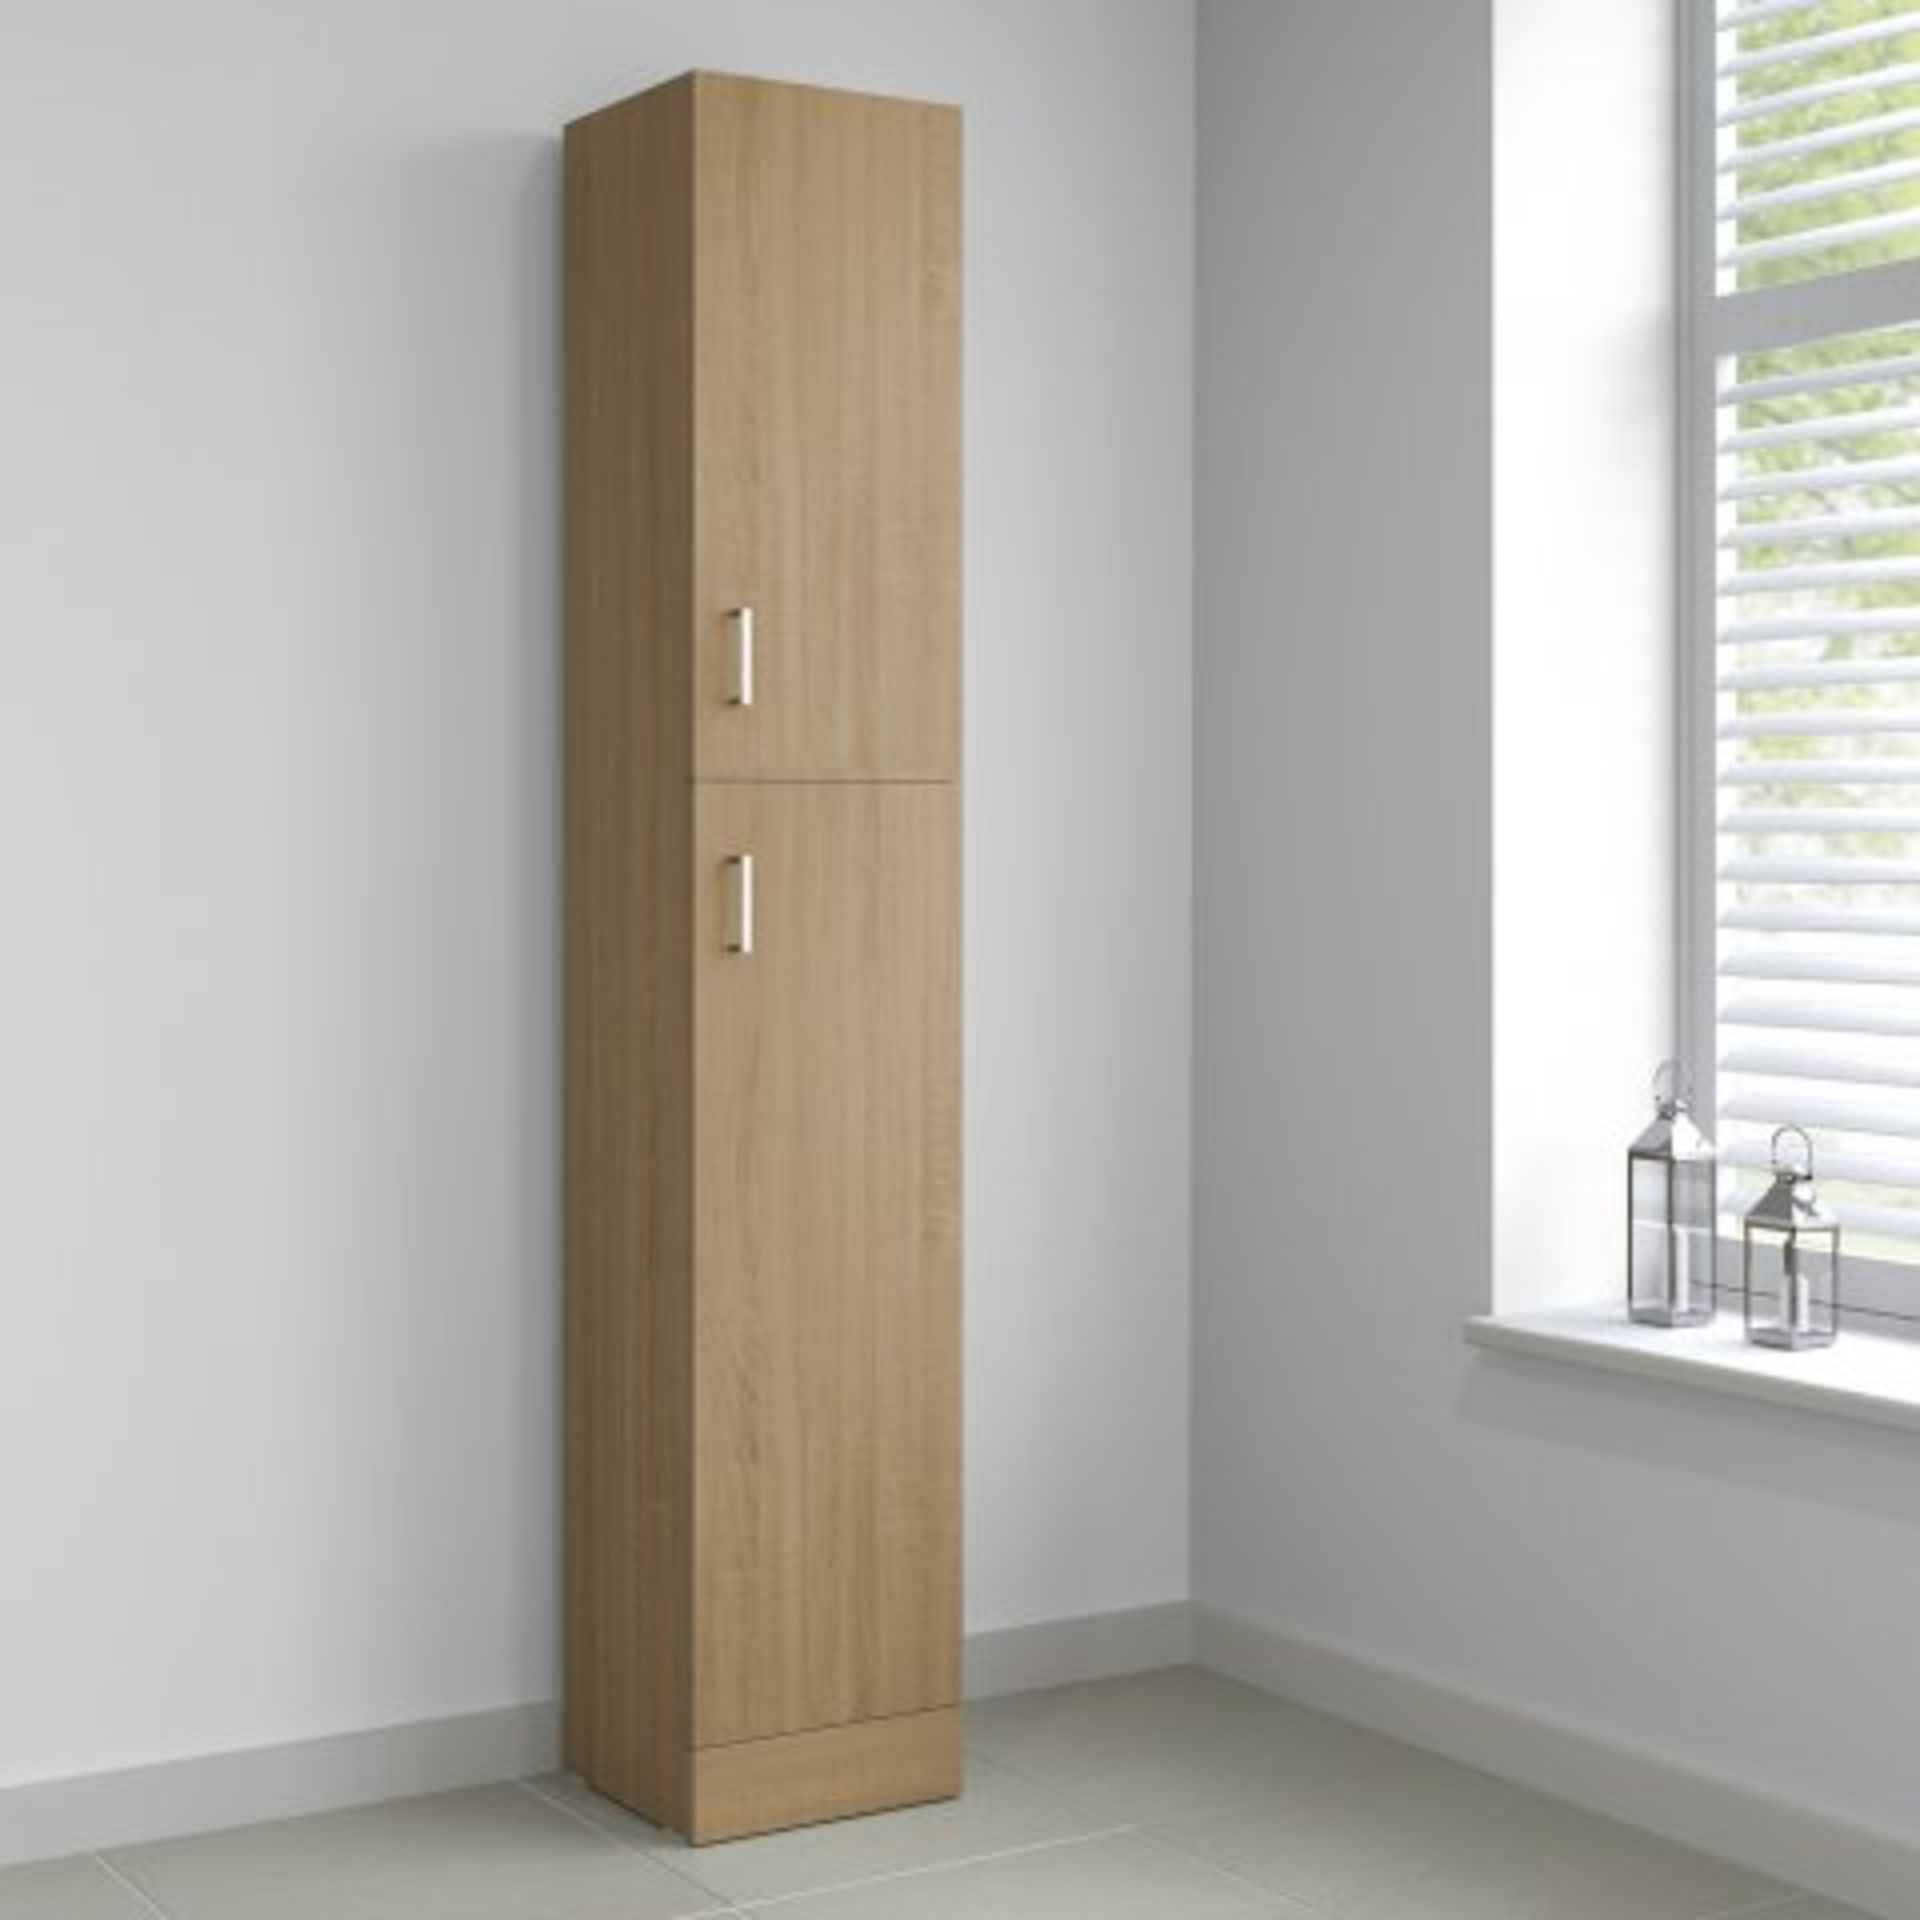 (Z211) 1900x300mm Quartz Oak Effect Tall Storage Cabinet - Floor Standing. RRP £299.99. - Image 4 of 4